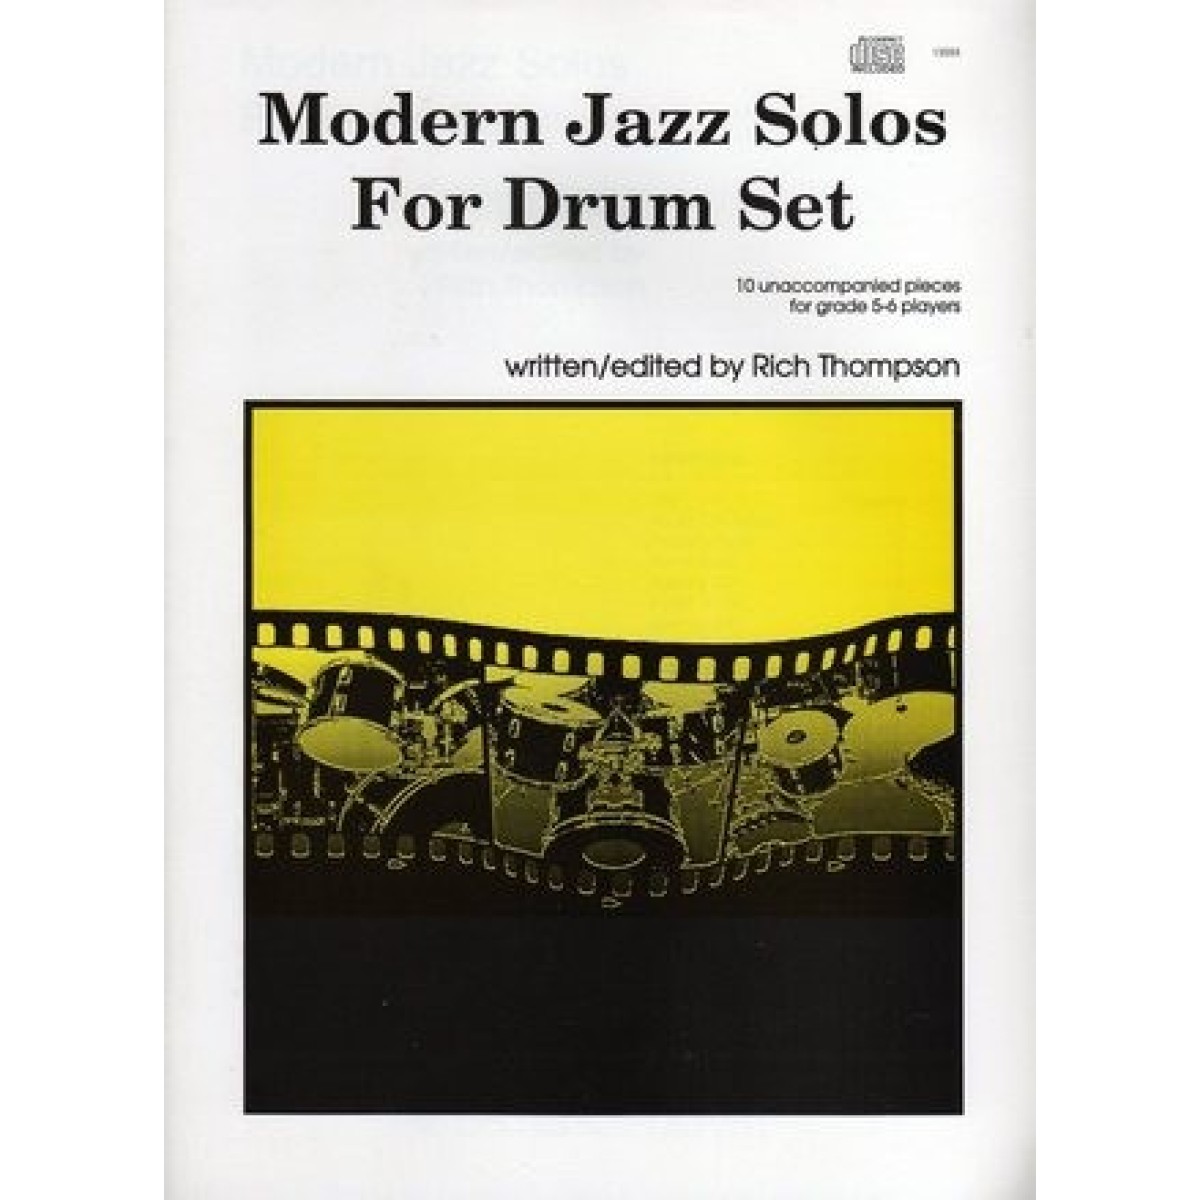 Modern Jazz Solos For Drum Set